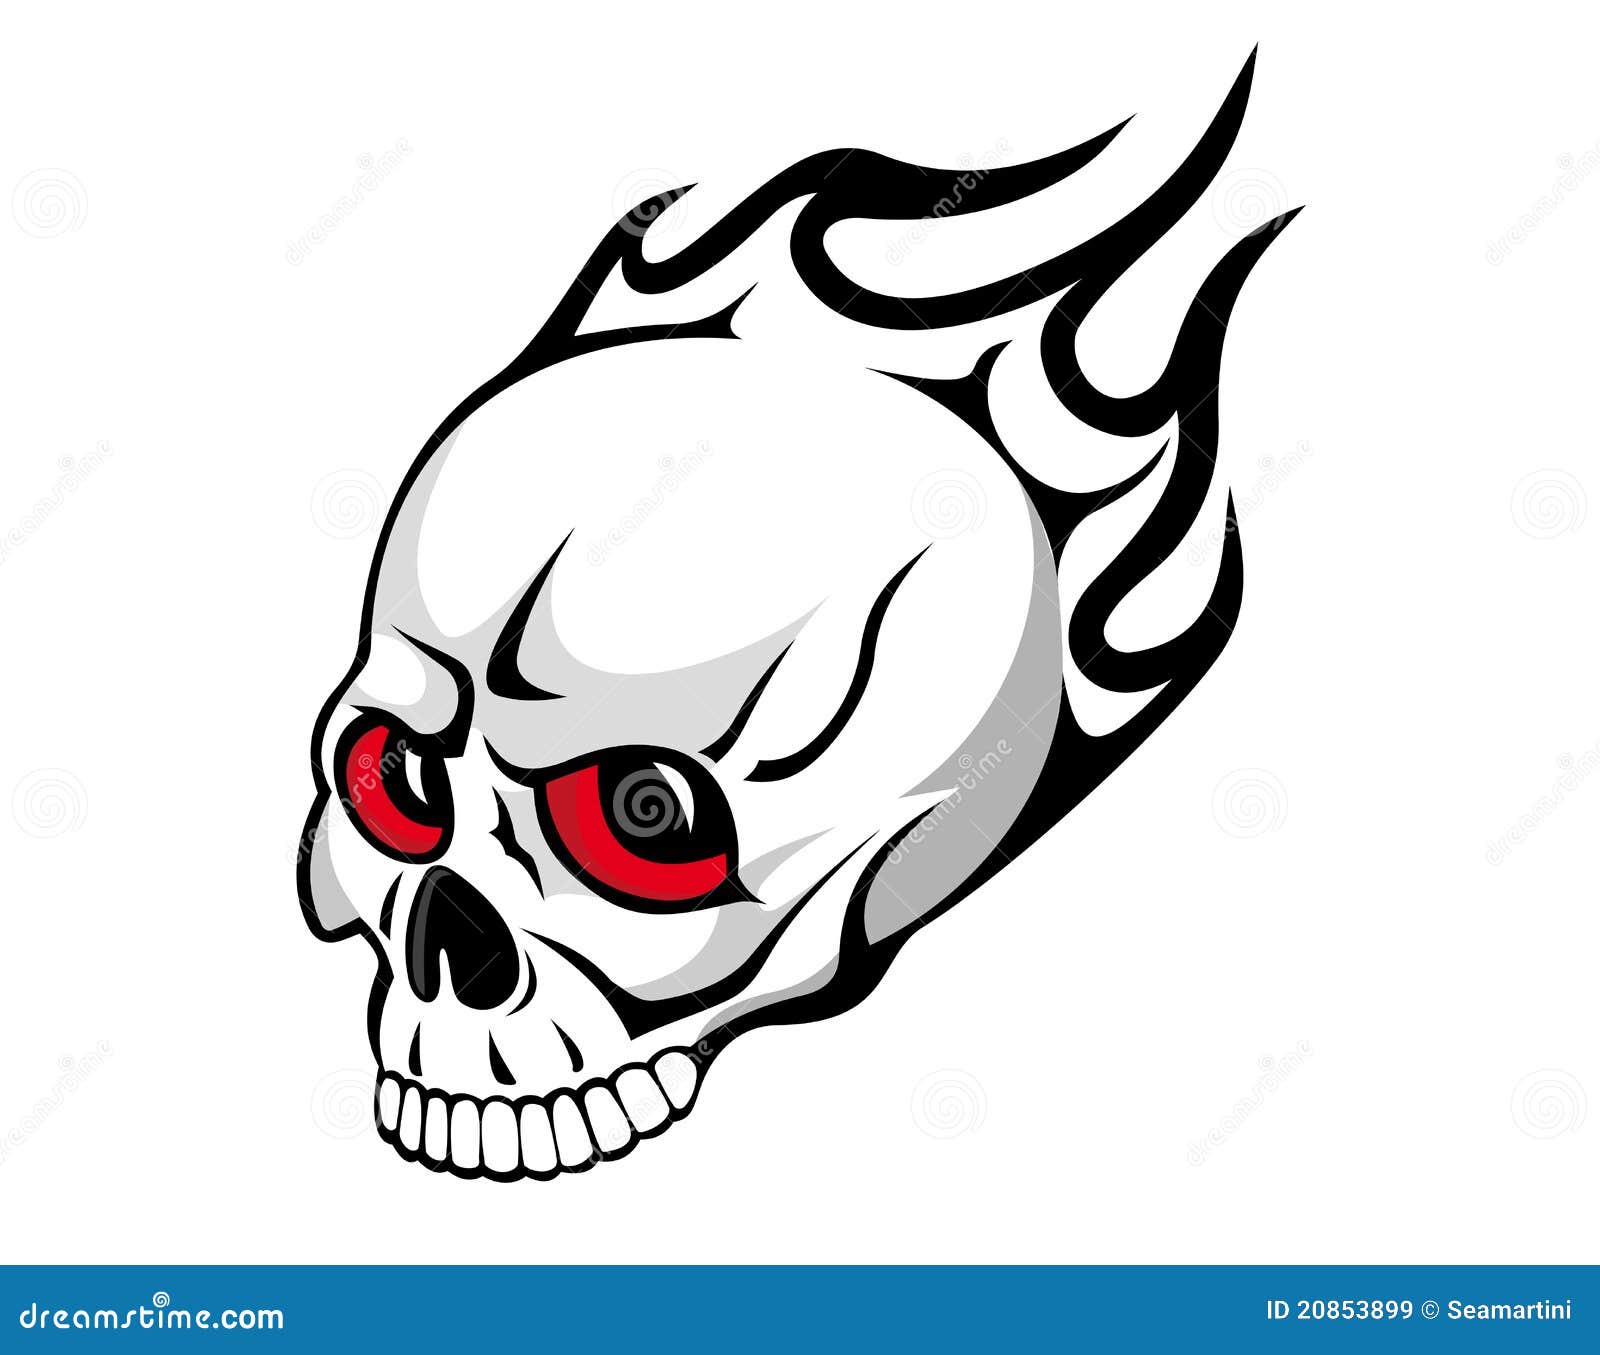 Evil Skull Tattoo Designs  Free Download Clip Art  Free Clip Art    ClipArt Best  ClipArt Best